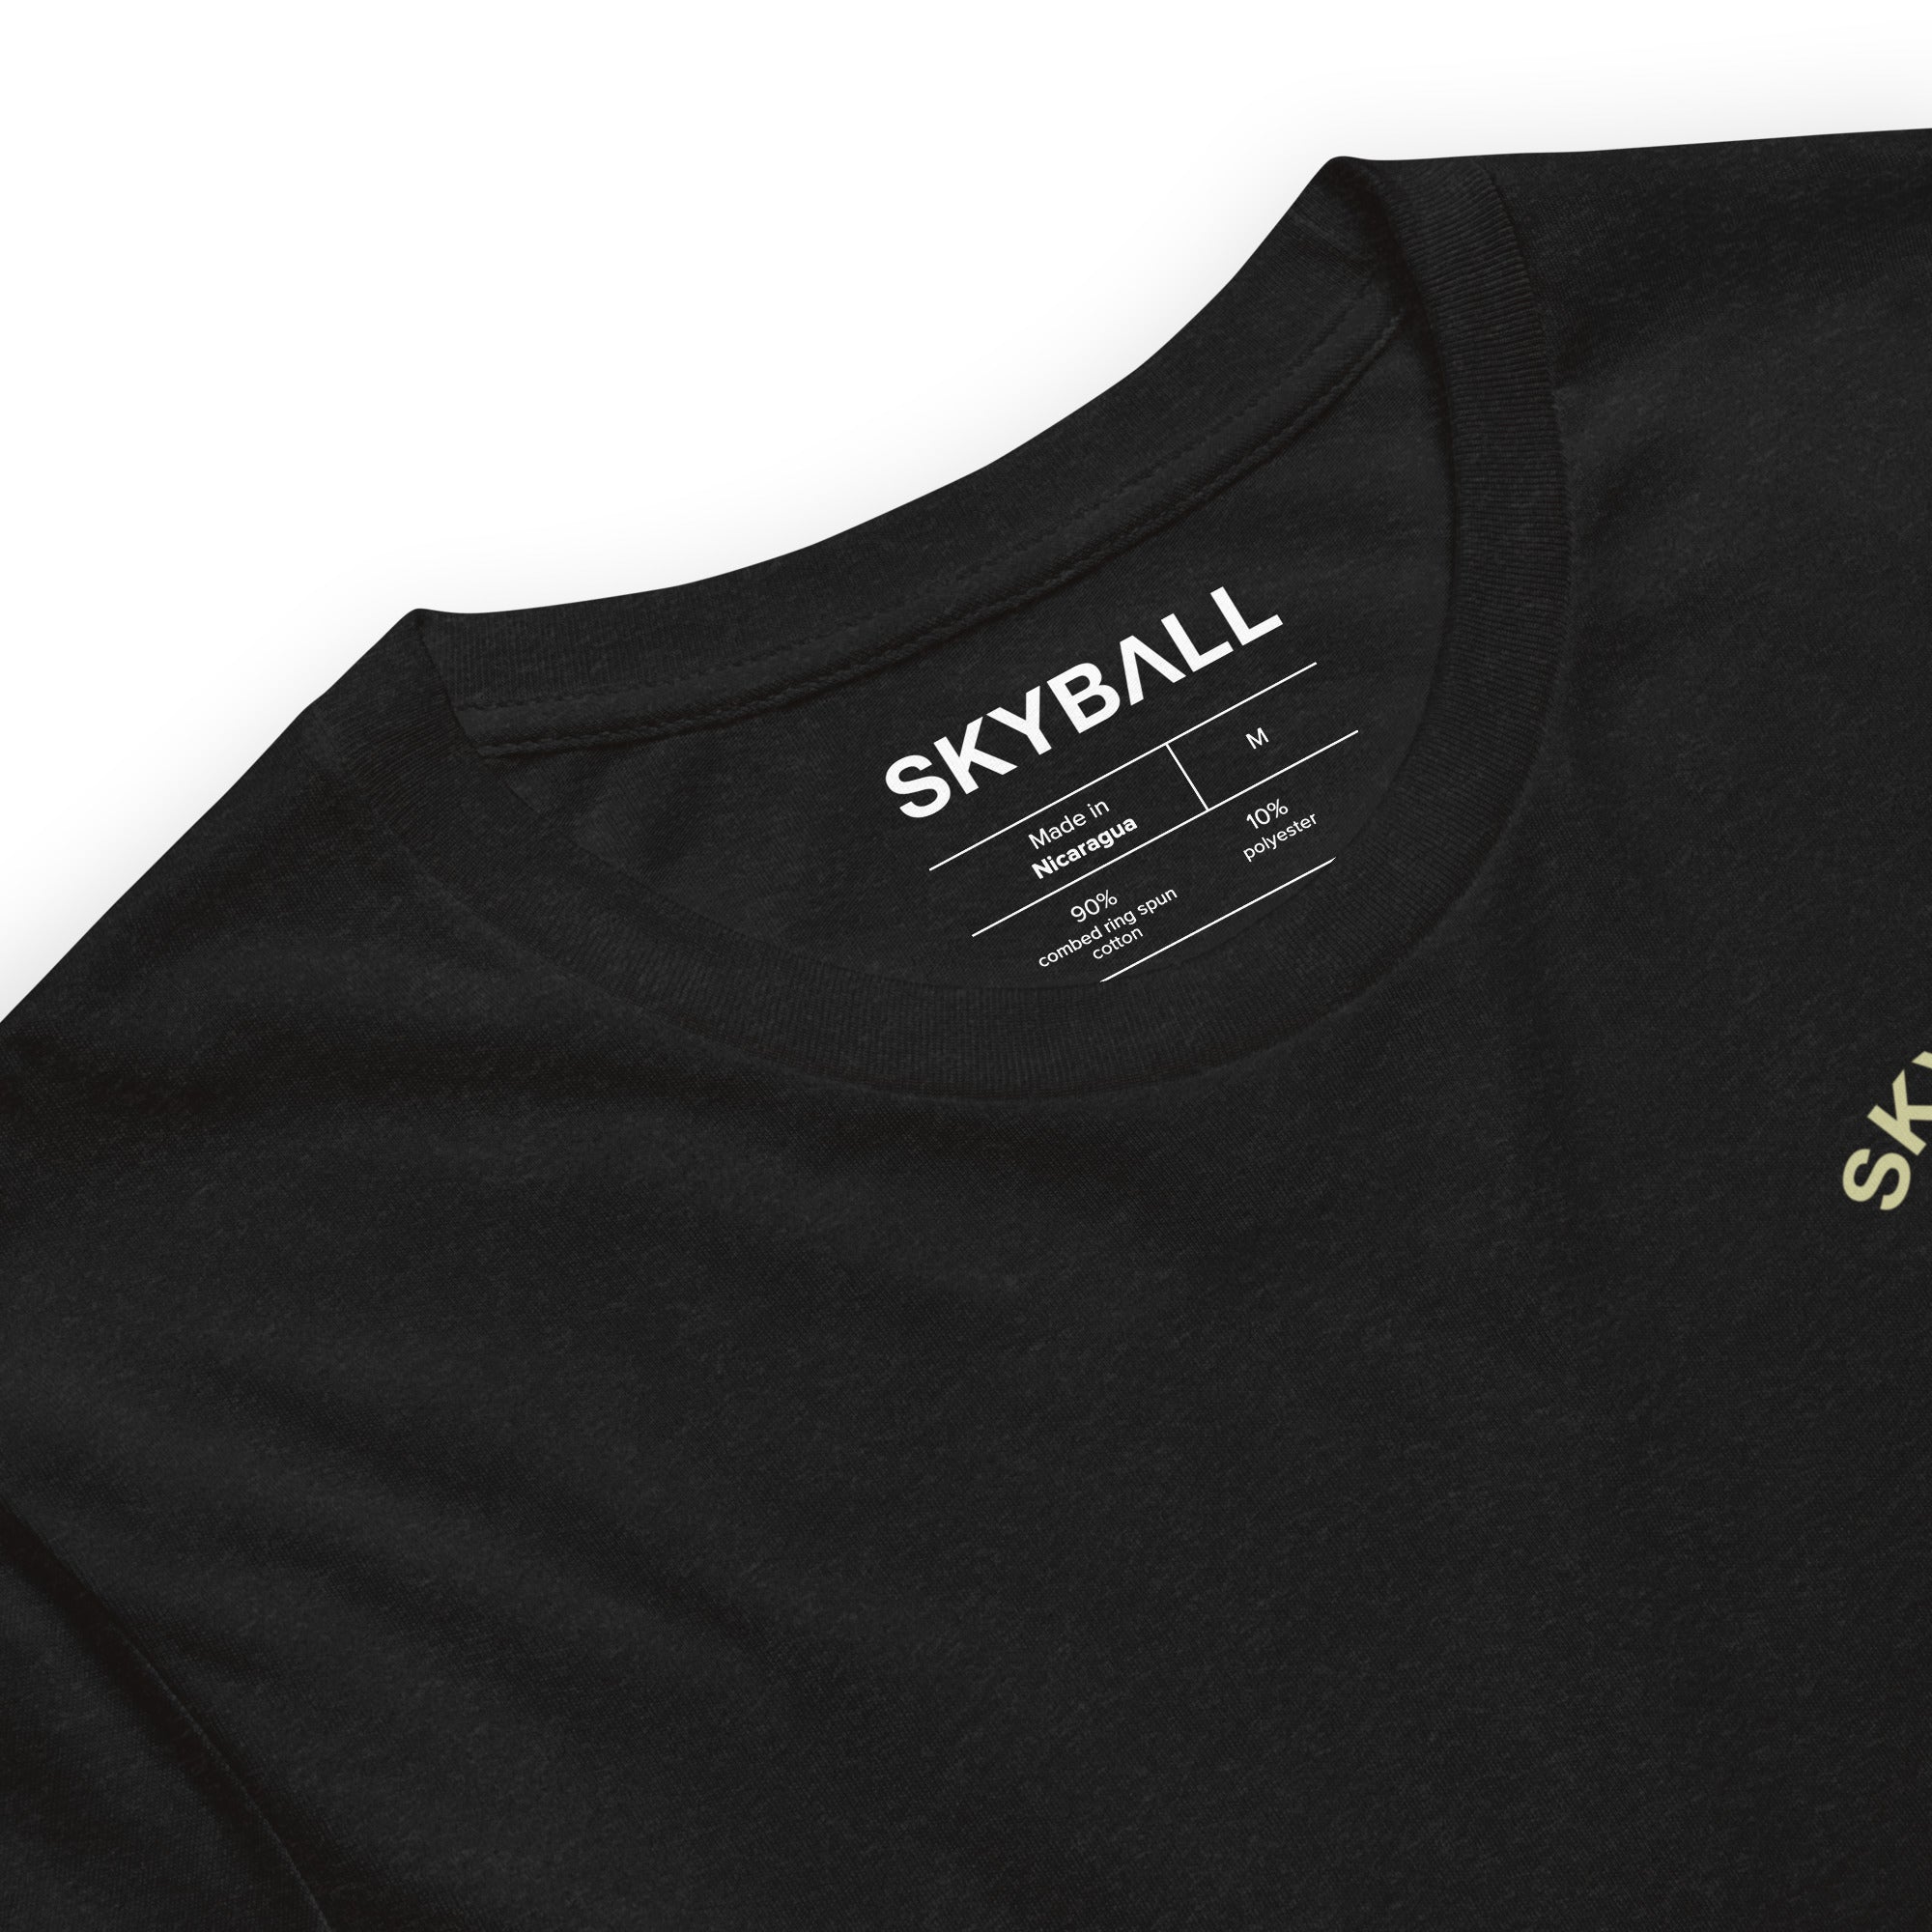 Skyball Beach Volleyball Apparel -  Beach Volleyball Inspired T-Shirt